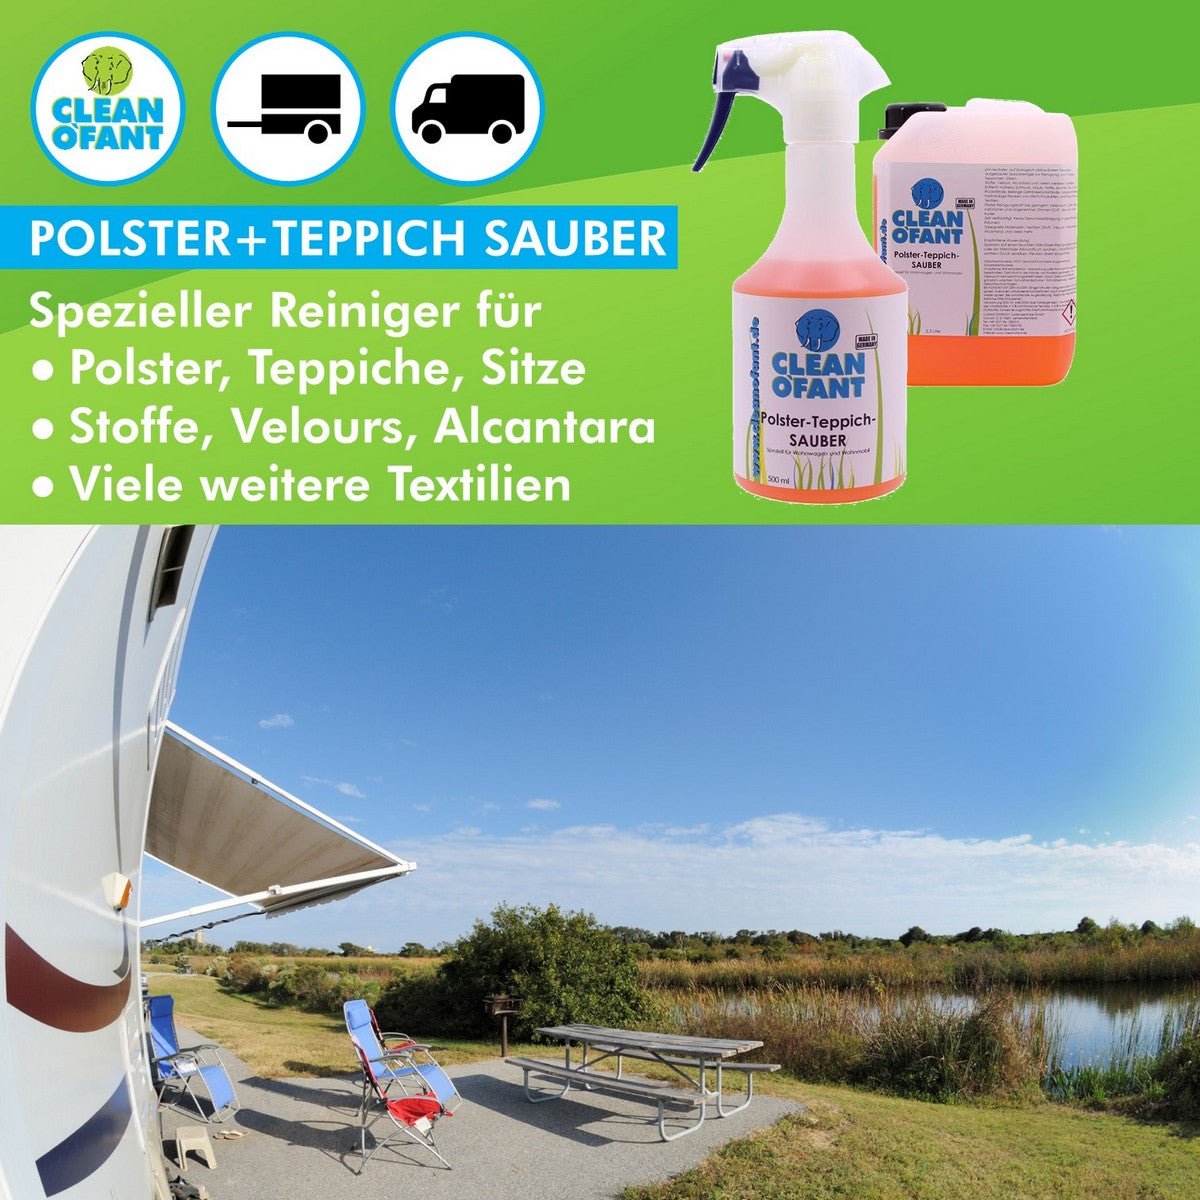 Polster-Teppich-SAUBER - 2,3 Liter - CLEANOFANT